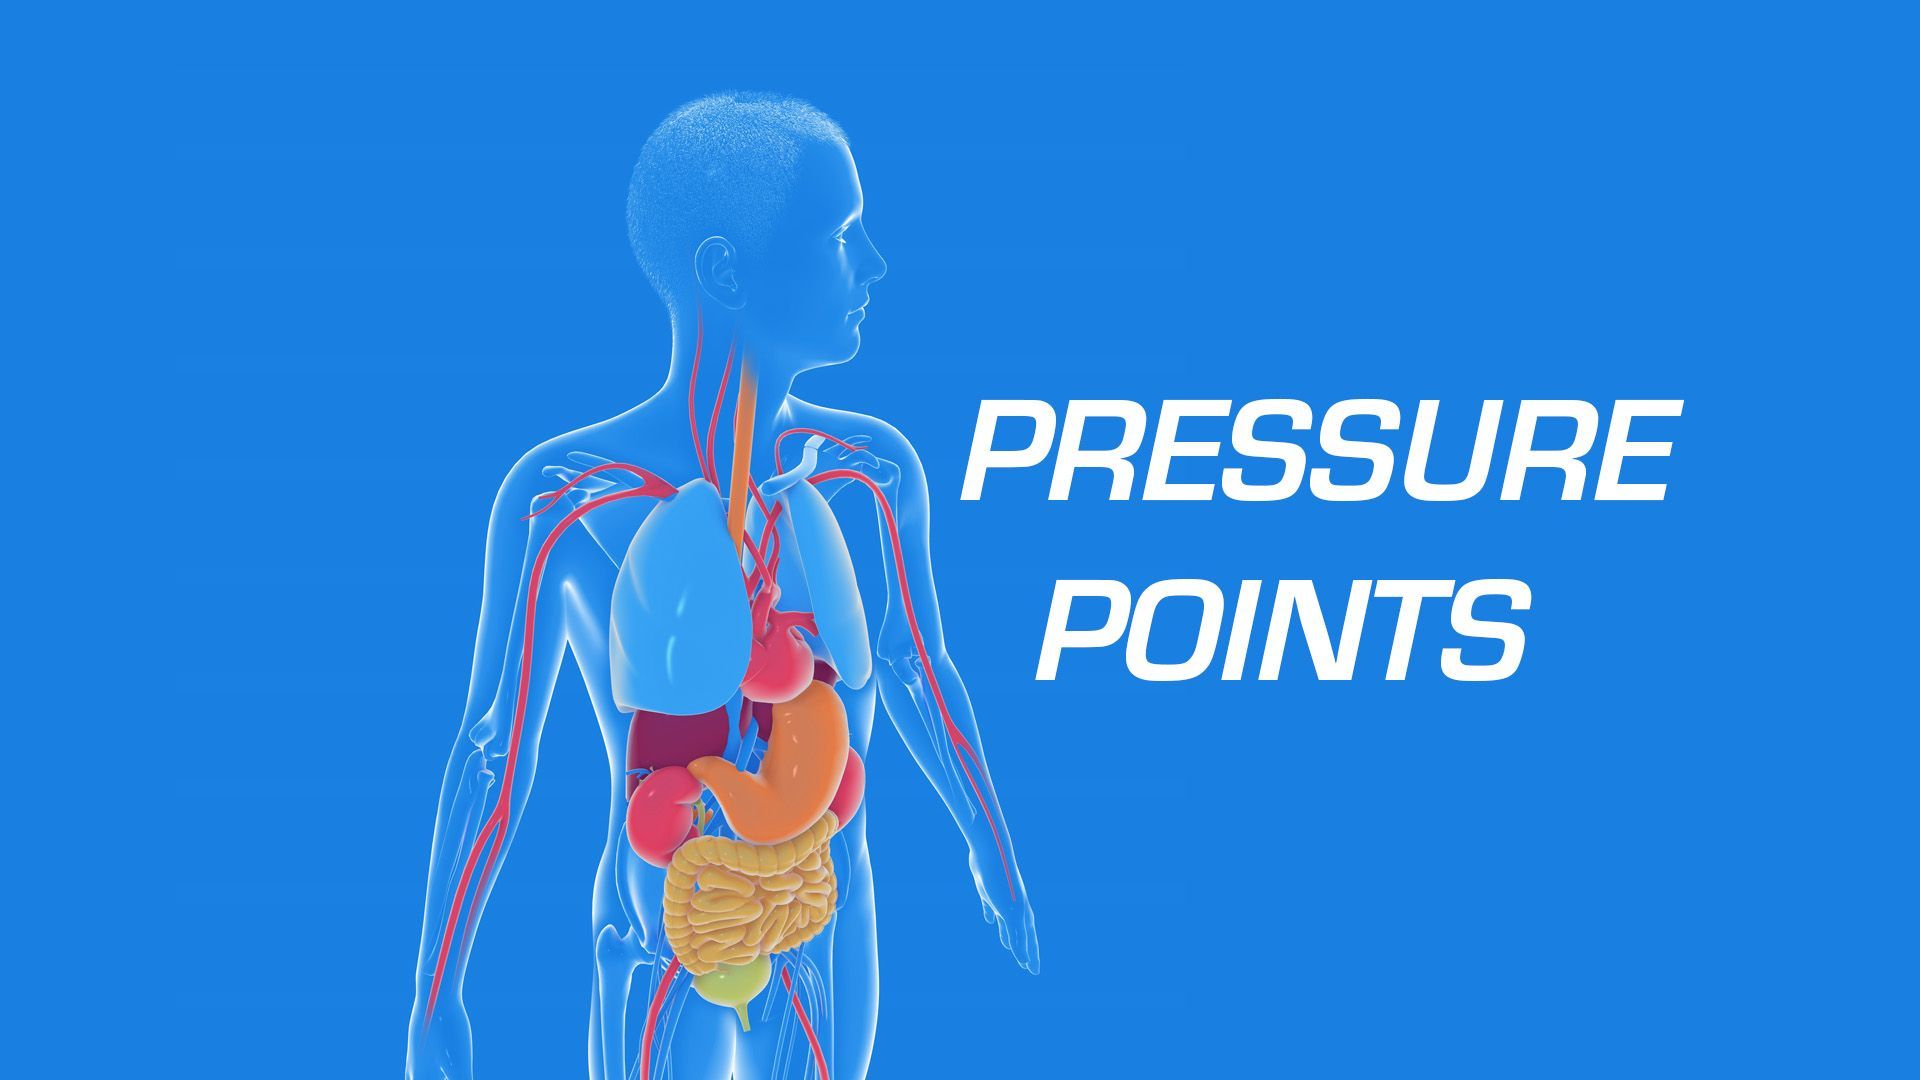 Pressure Points Post | Header Image by © PepeGallardo / Adobe Stock